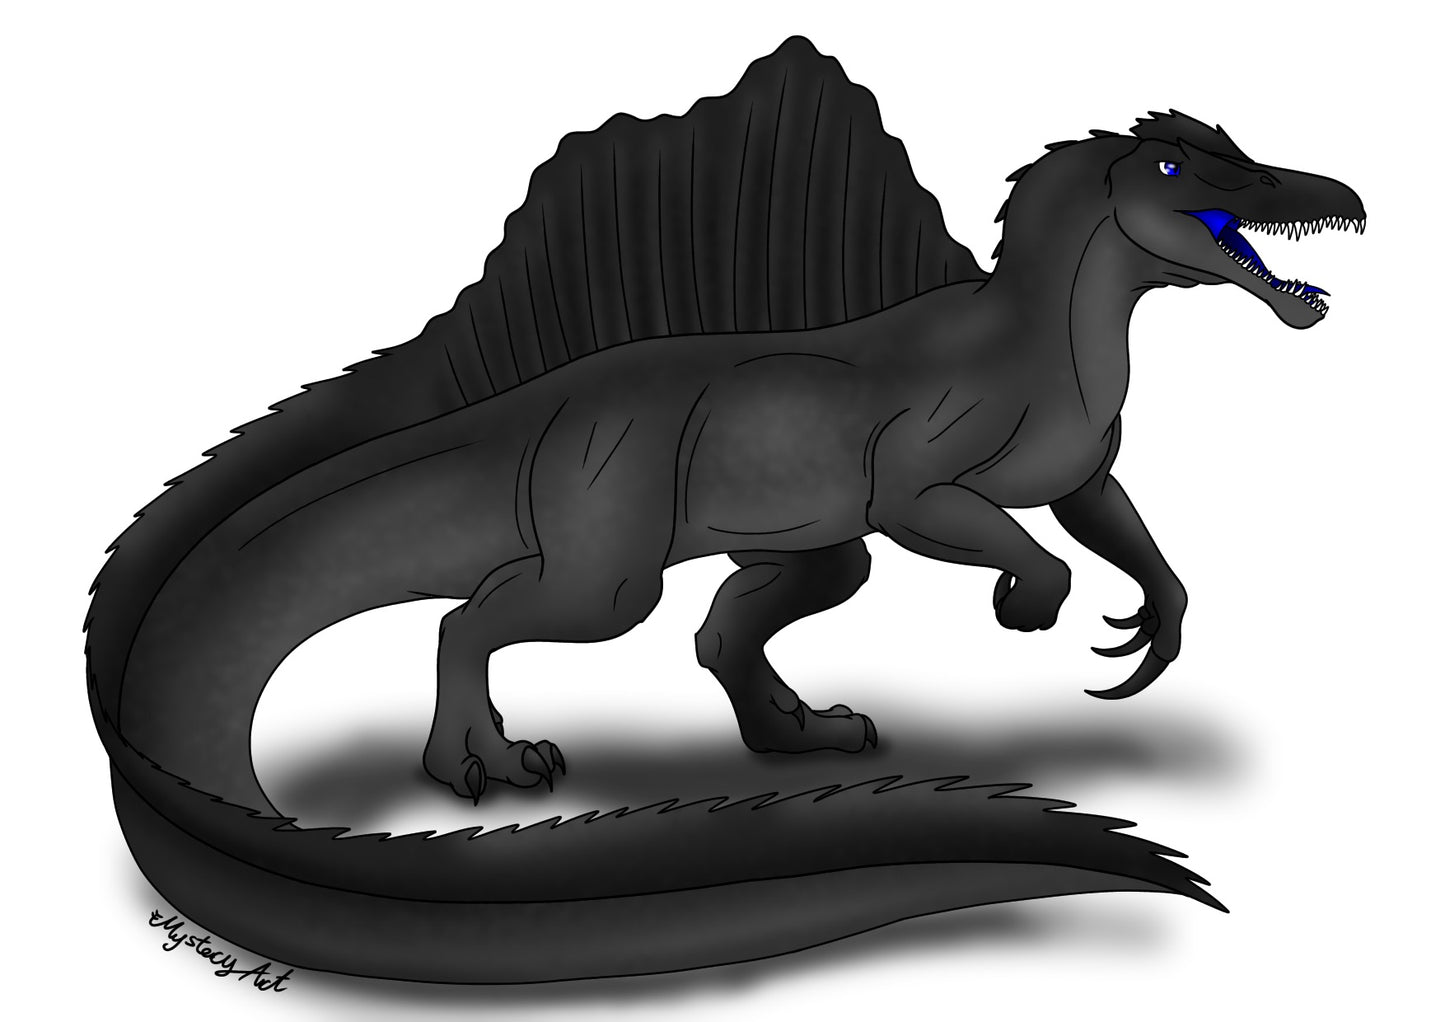 BlackIce the Spinosaurus 2